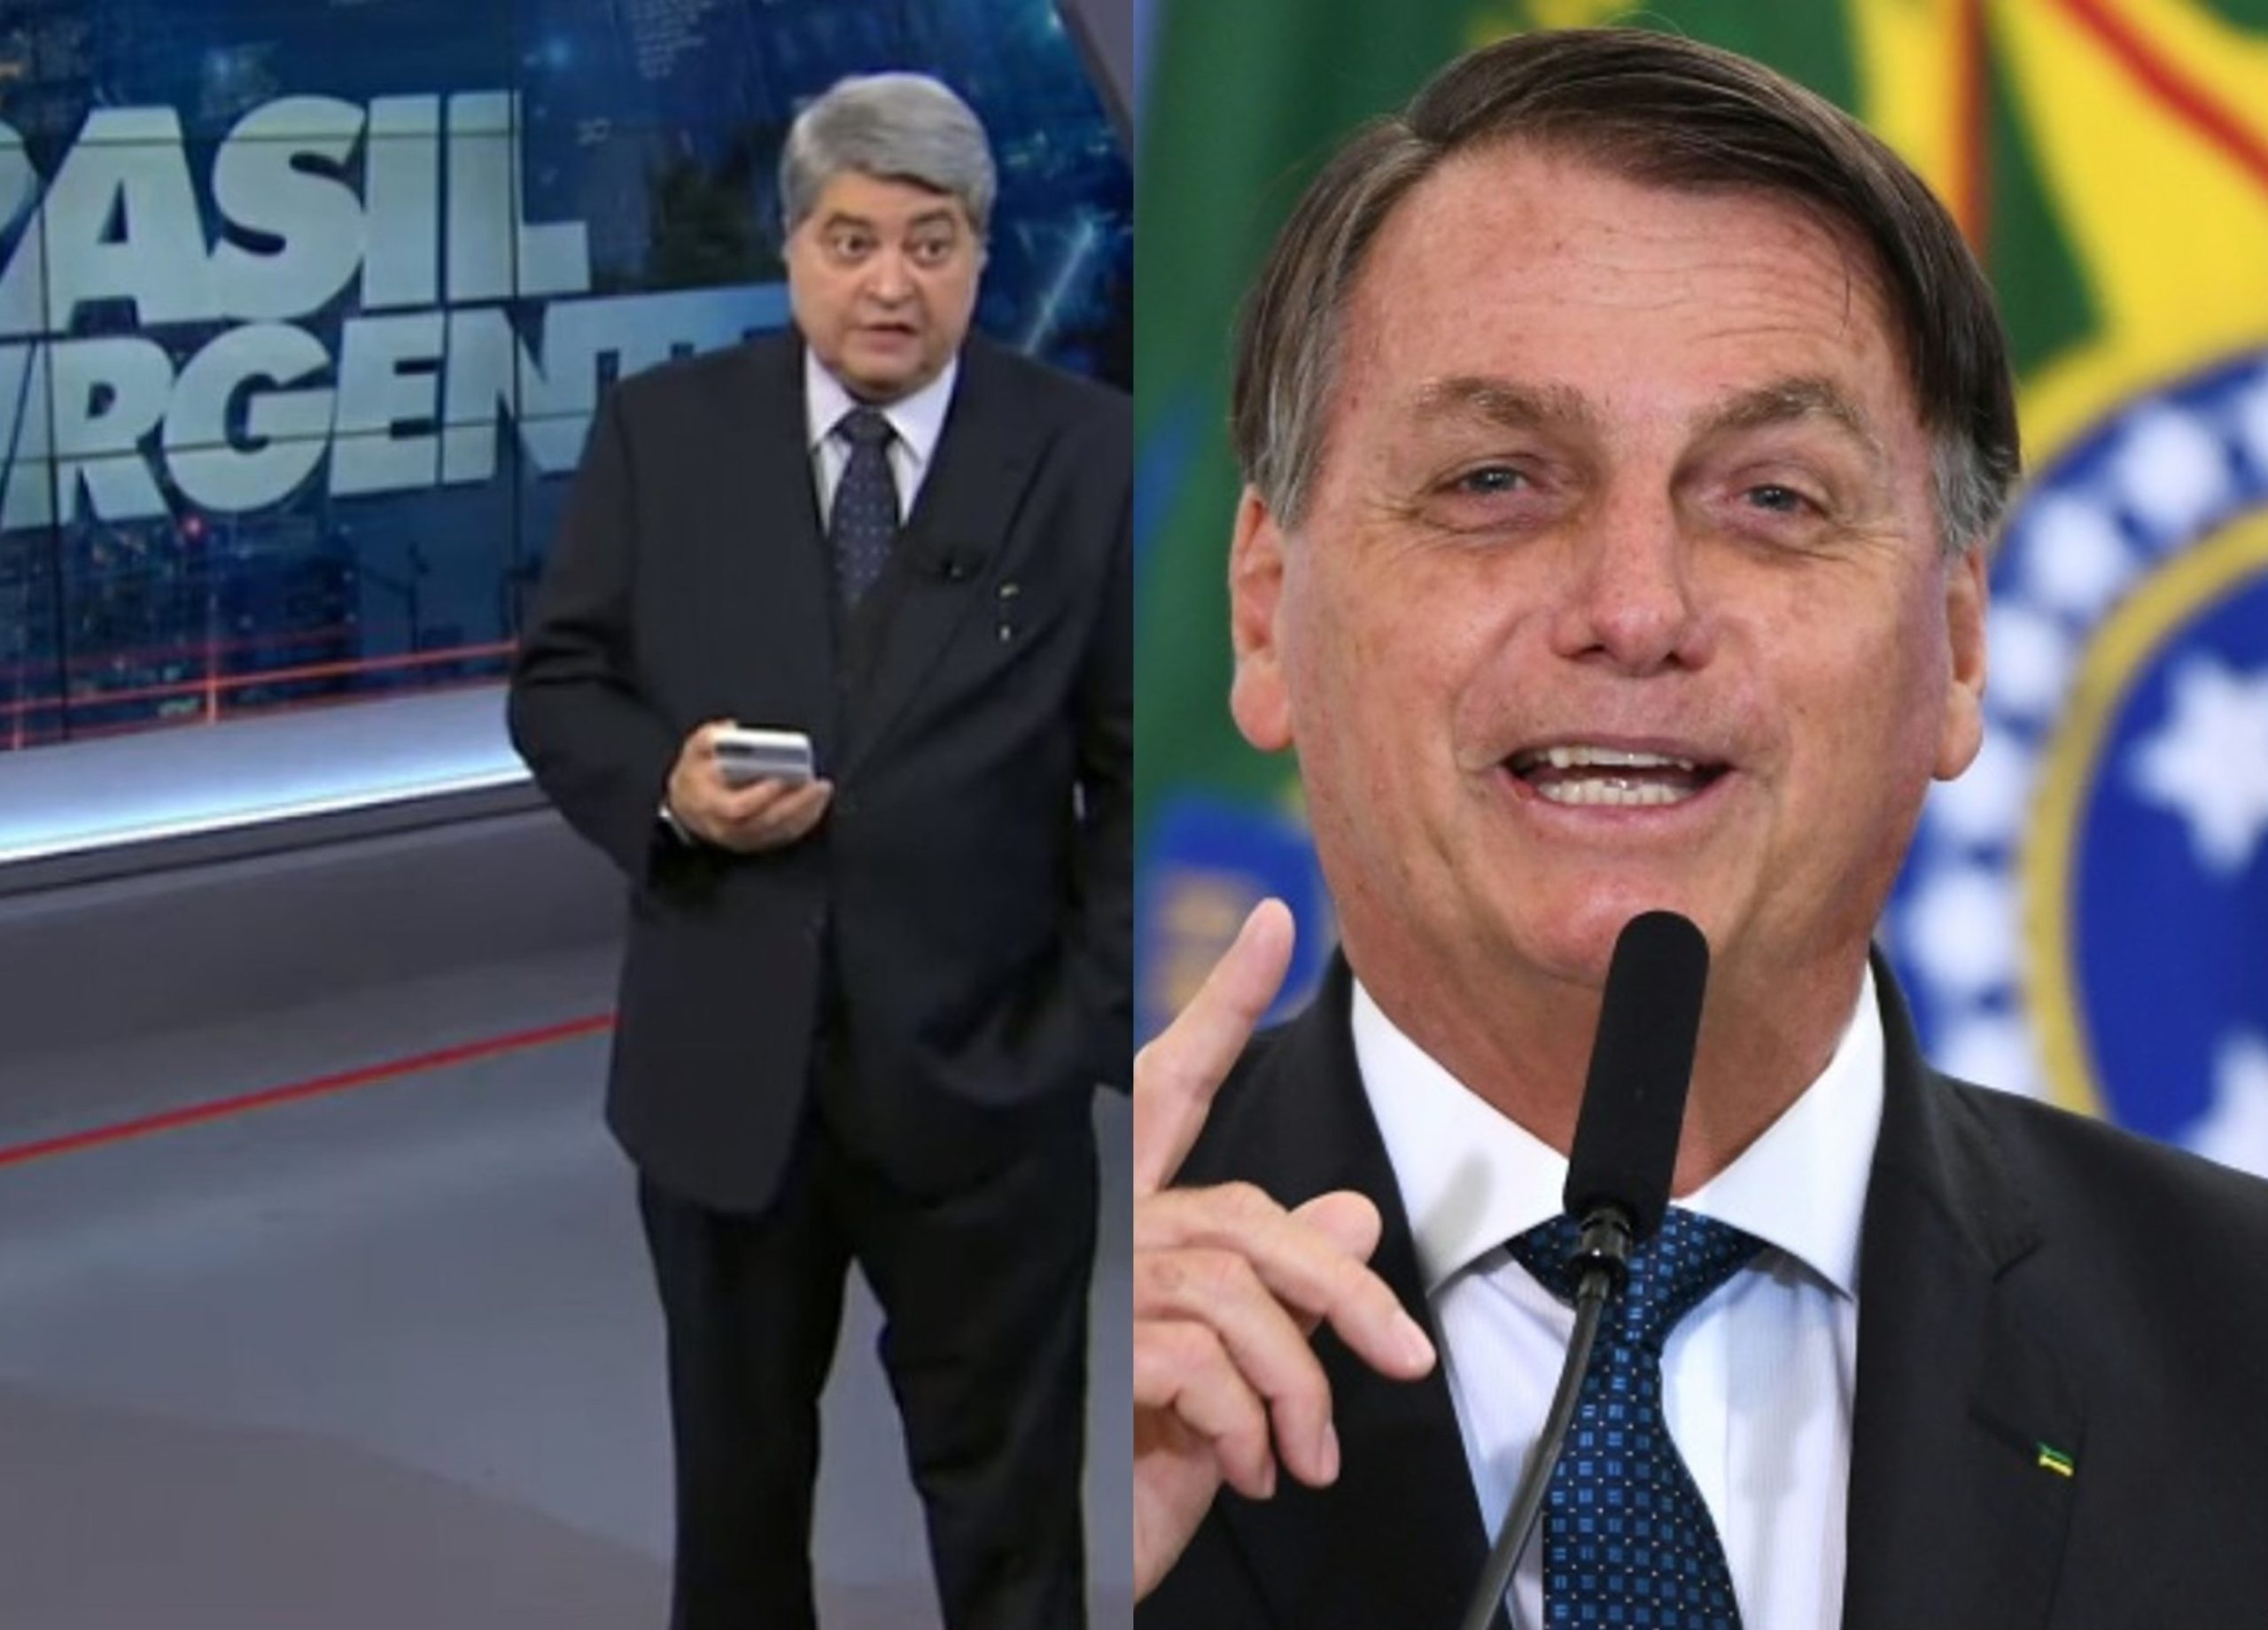 Bolsonaro Datena